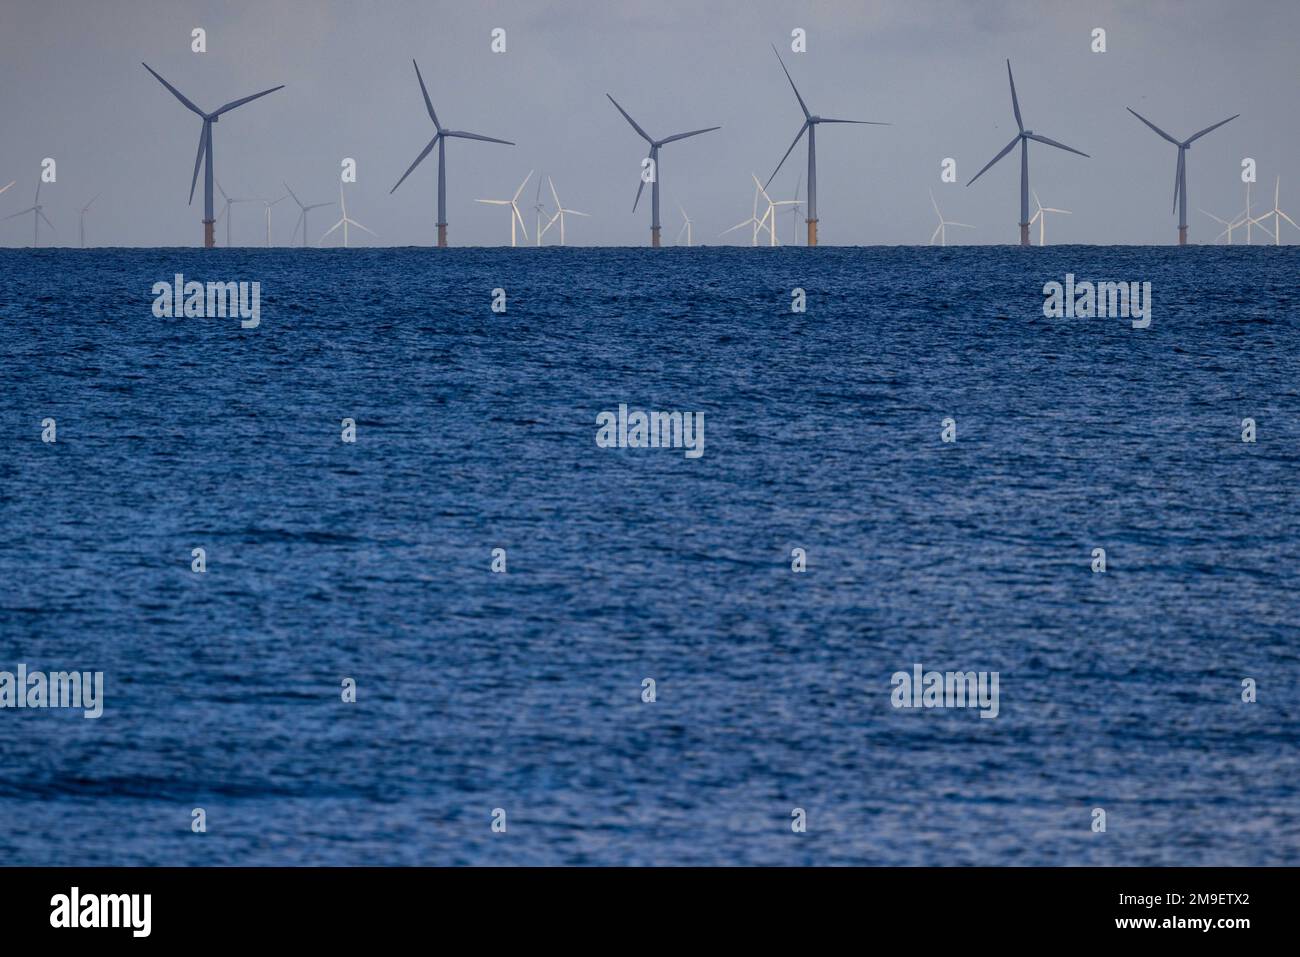 Llandudno, Wales. Gwynt y Môr (Welsh: meaning sea wind) is a 576-megawatt (MW) offshore wind farm located off the coast of Wales. Stock Photo